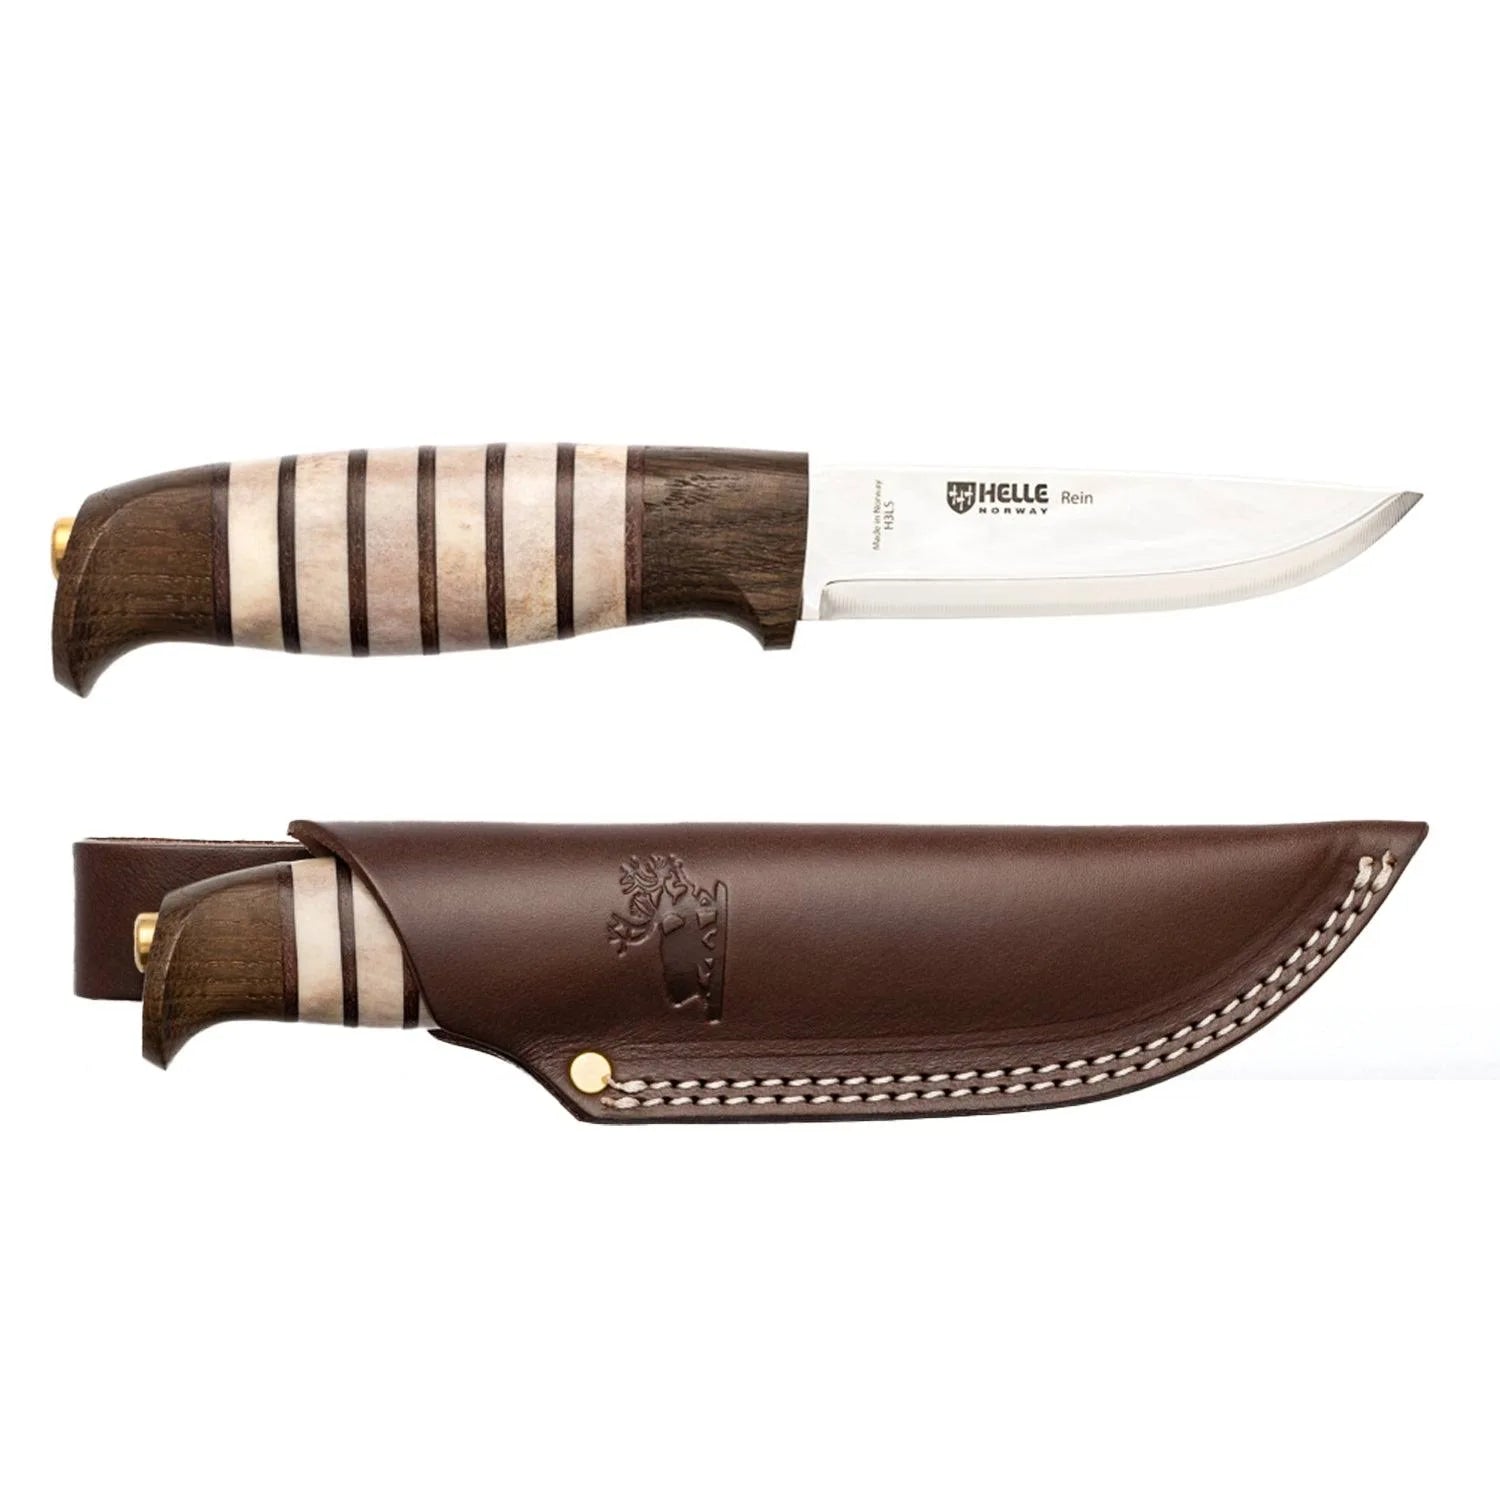 Helle Knives 2023 Ltd Edition Rein 90mm Hunting Knife